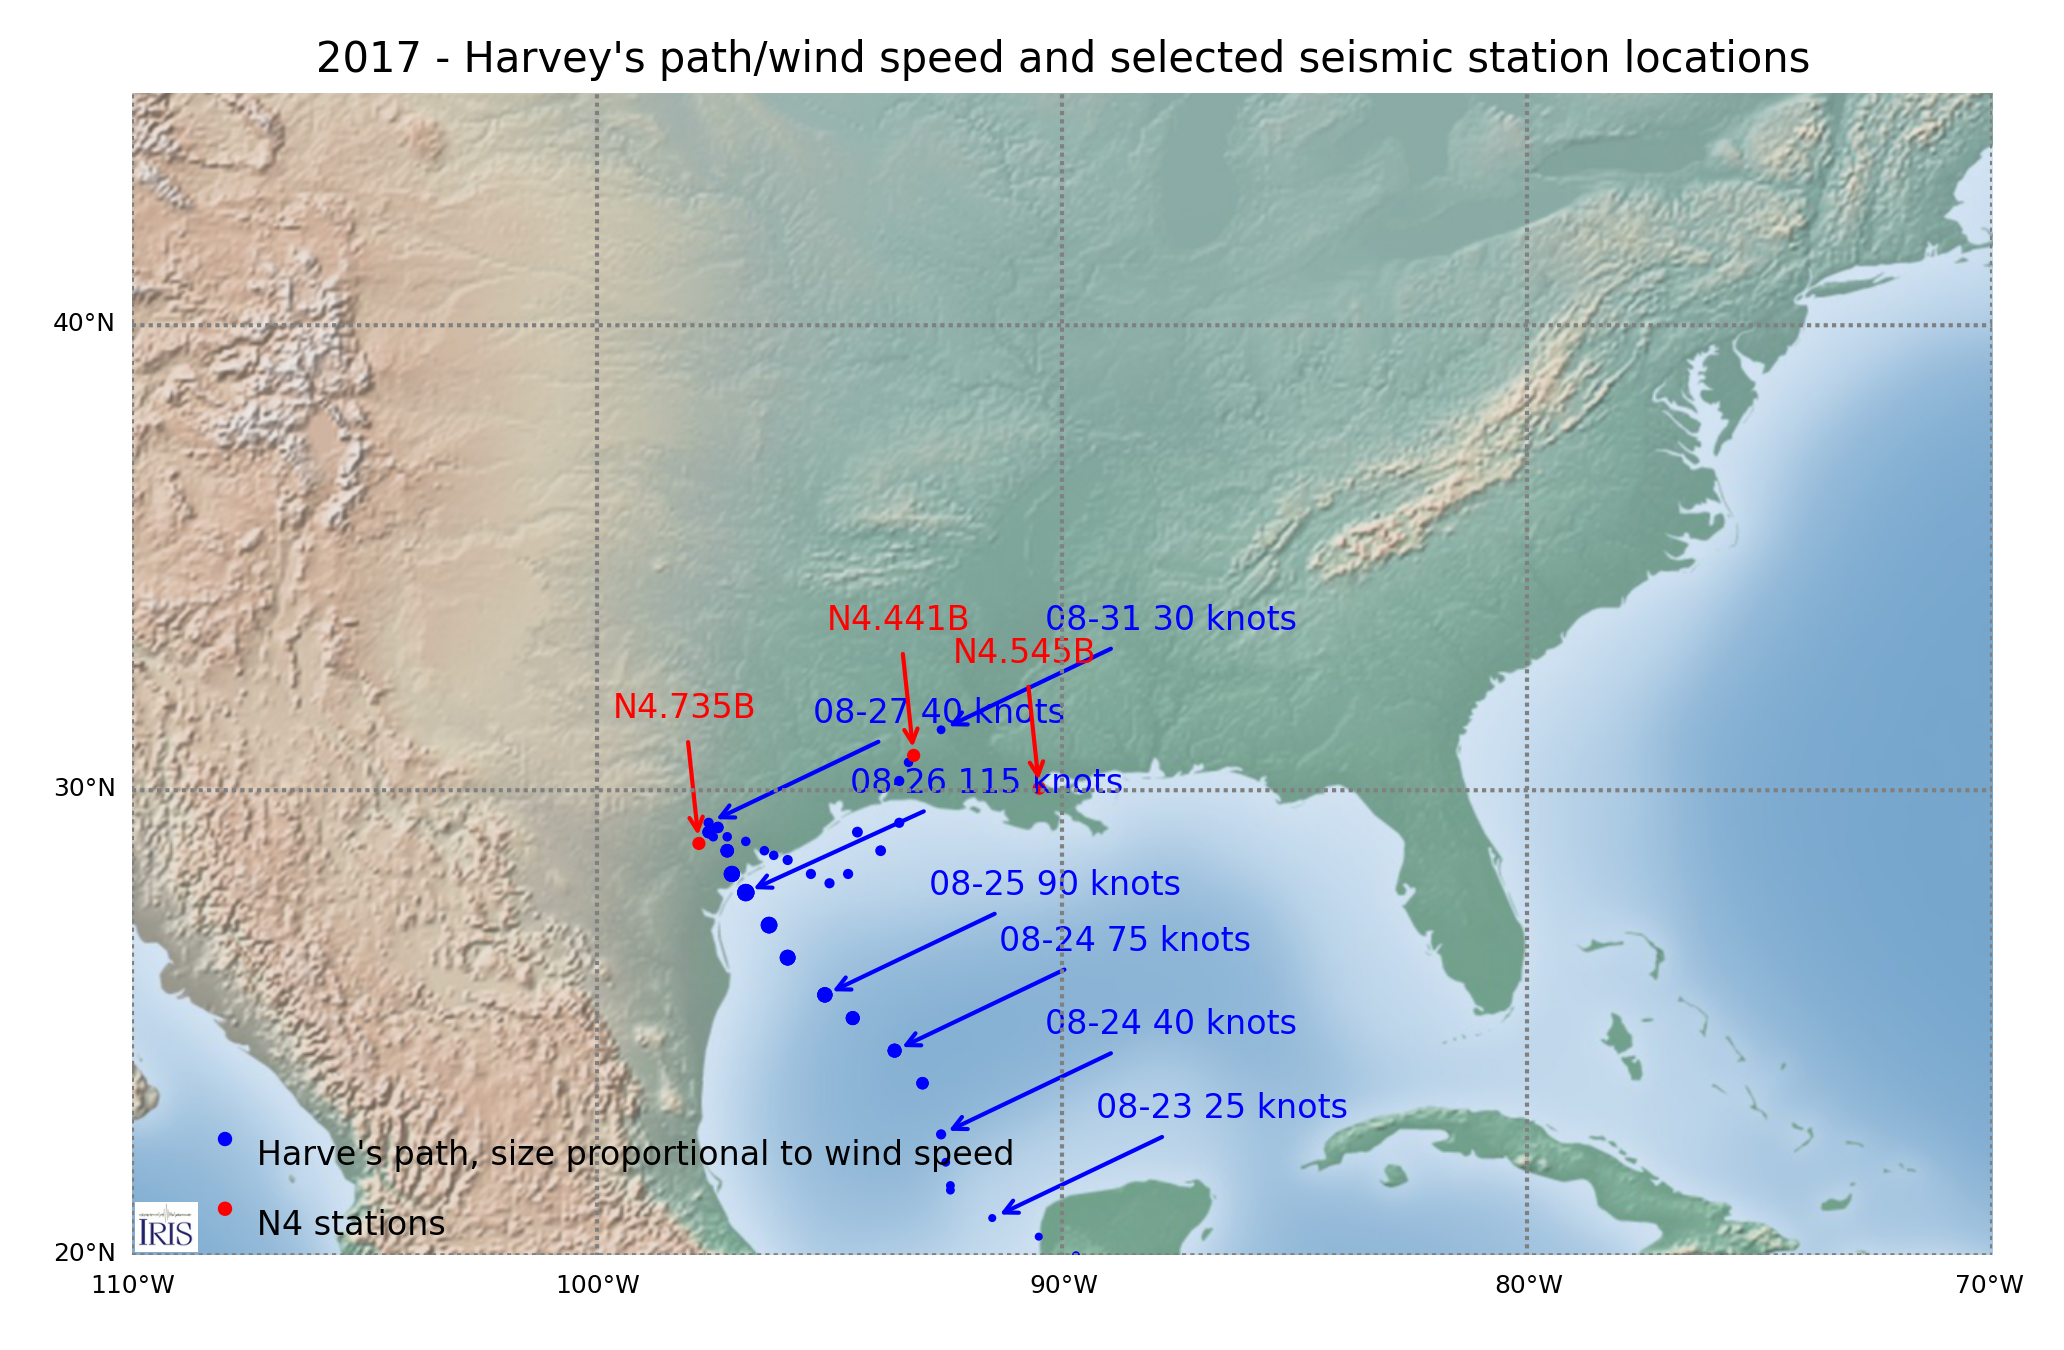  Path/wind speed of Harvey